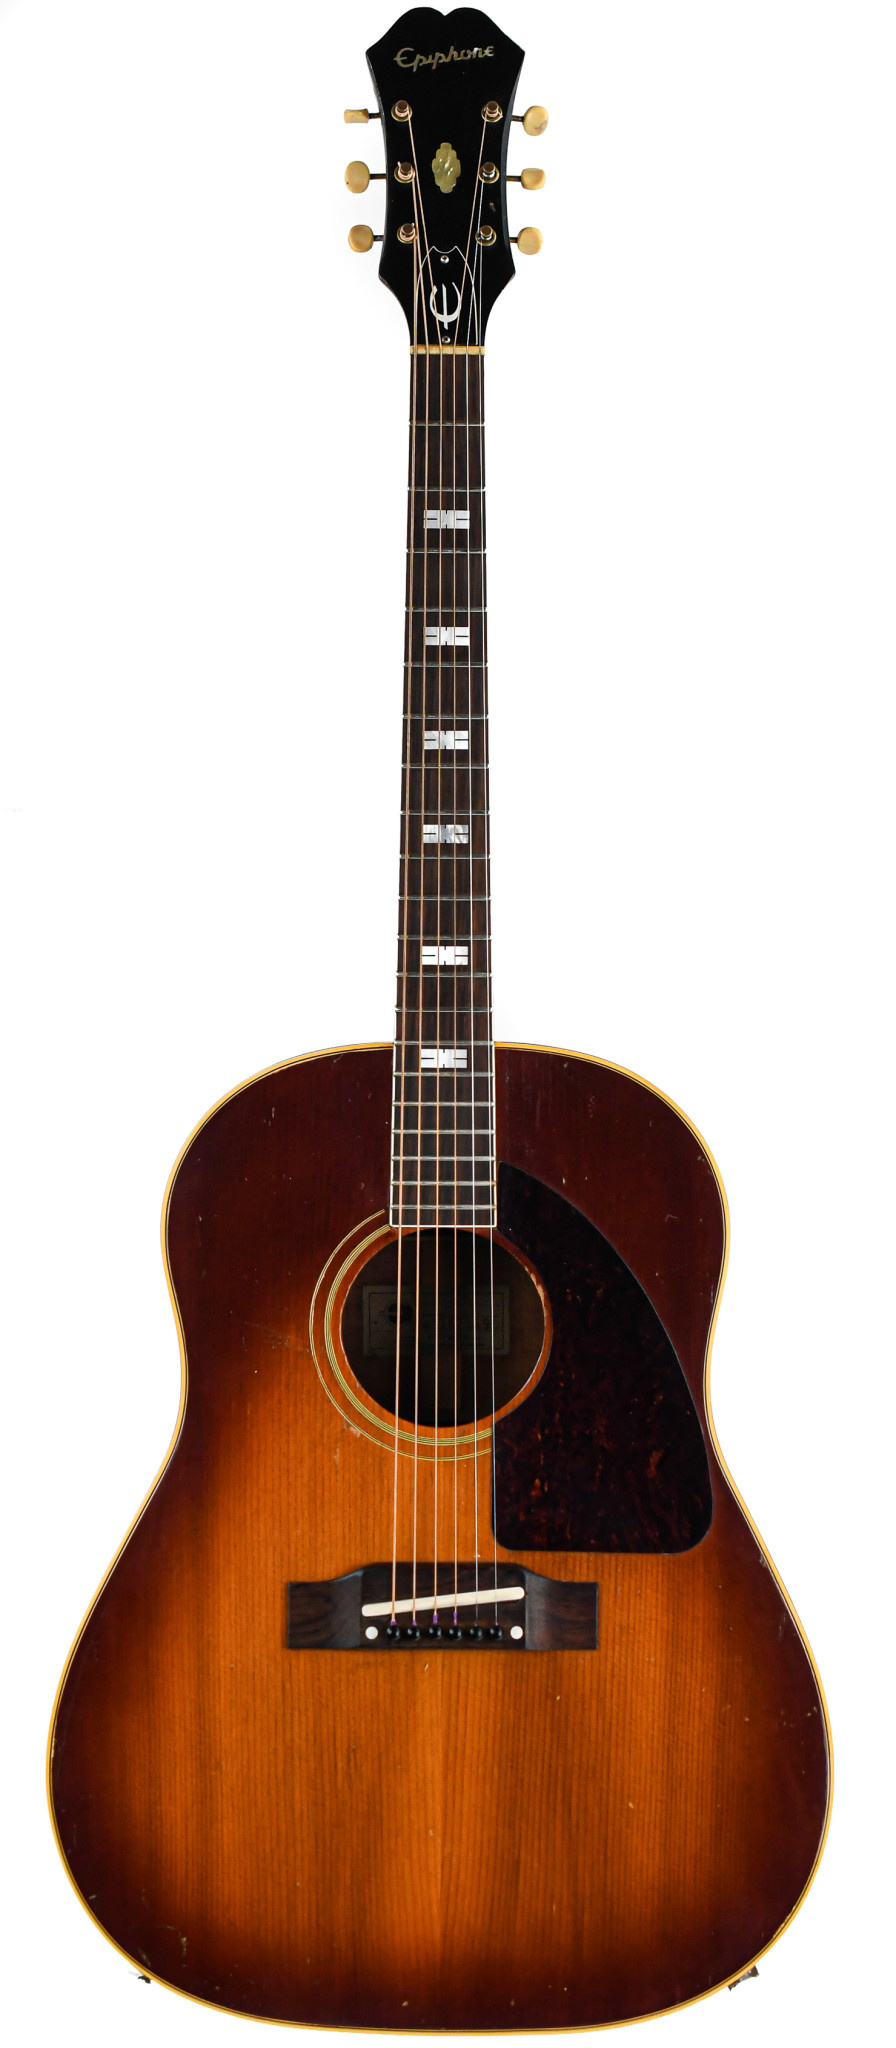 Epiphone FT79 Texan Sunburst 1964 Guitar For Sale The Fellowship